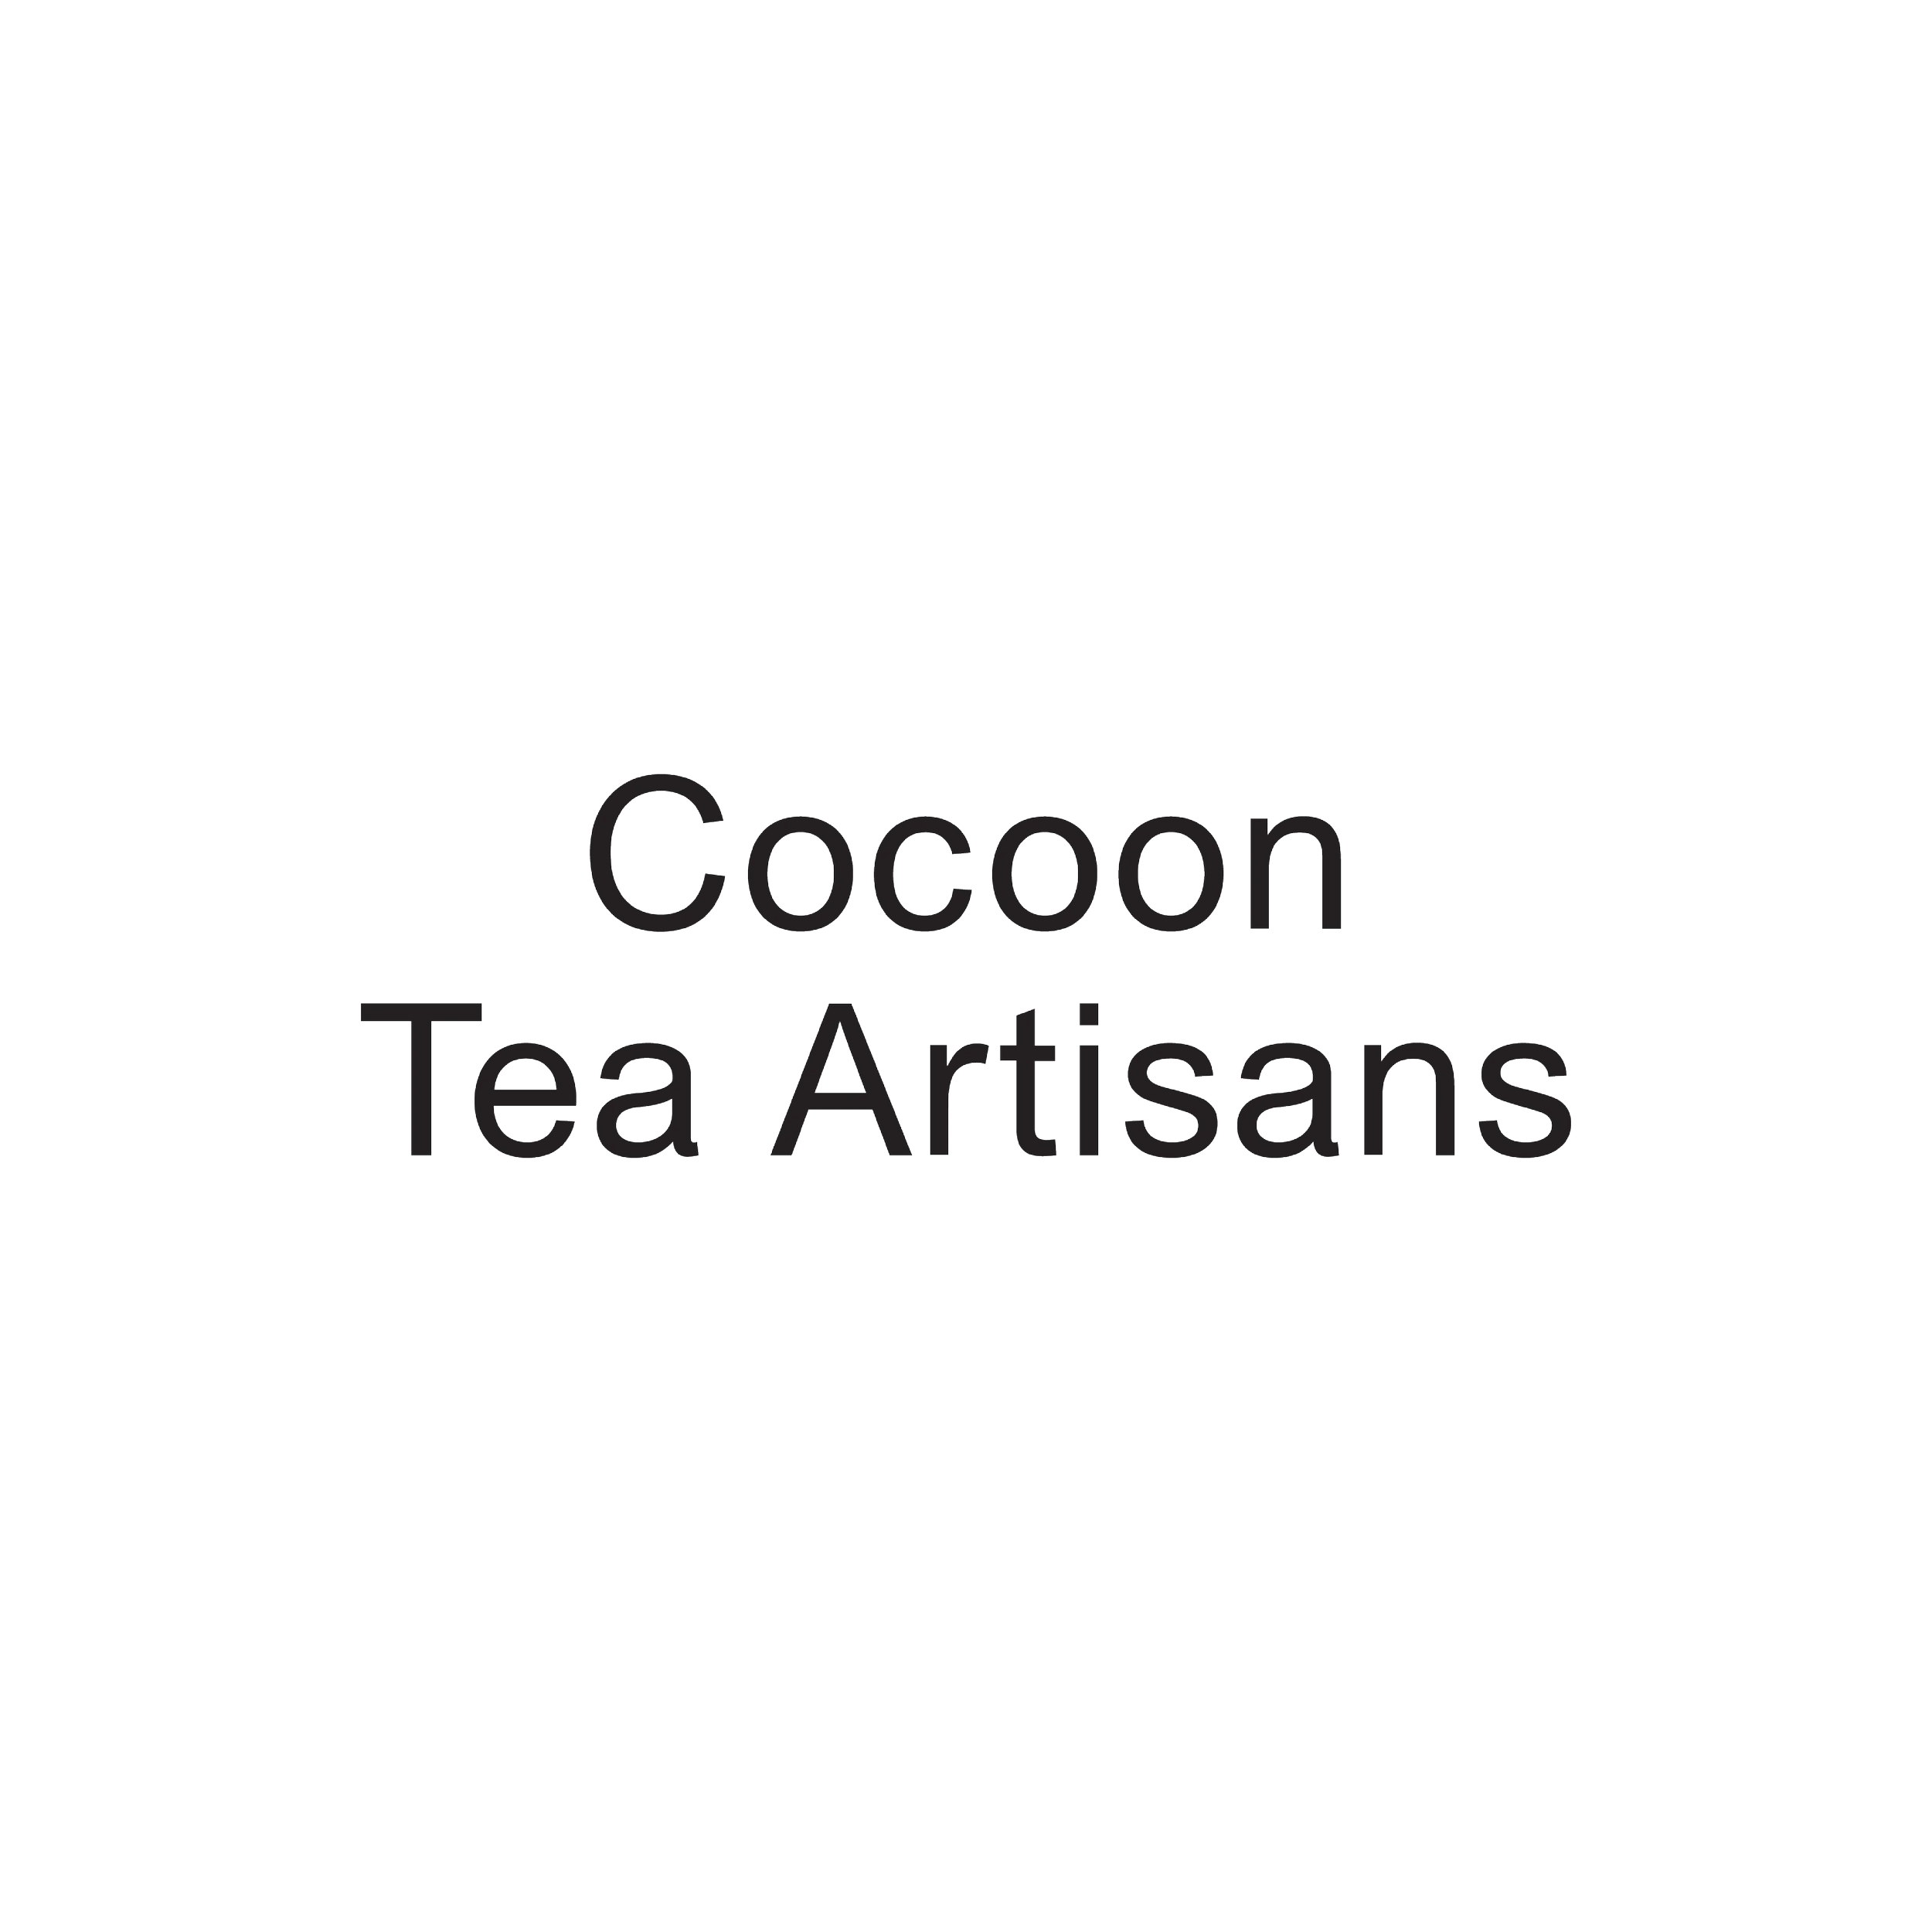 Cocoon Tea Artisans.png